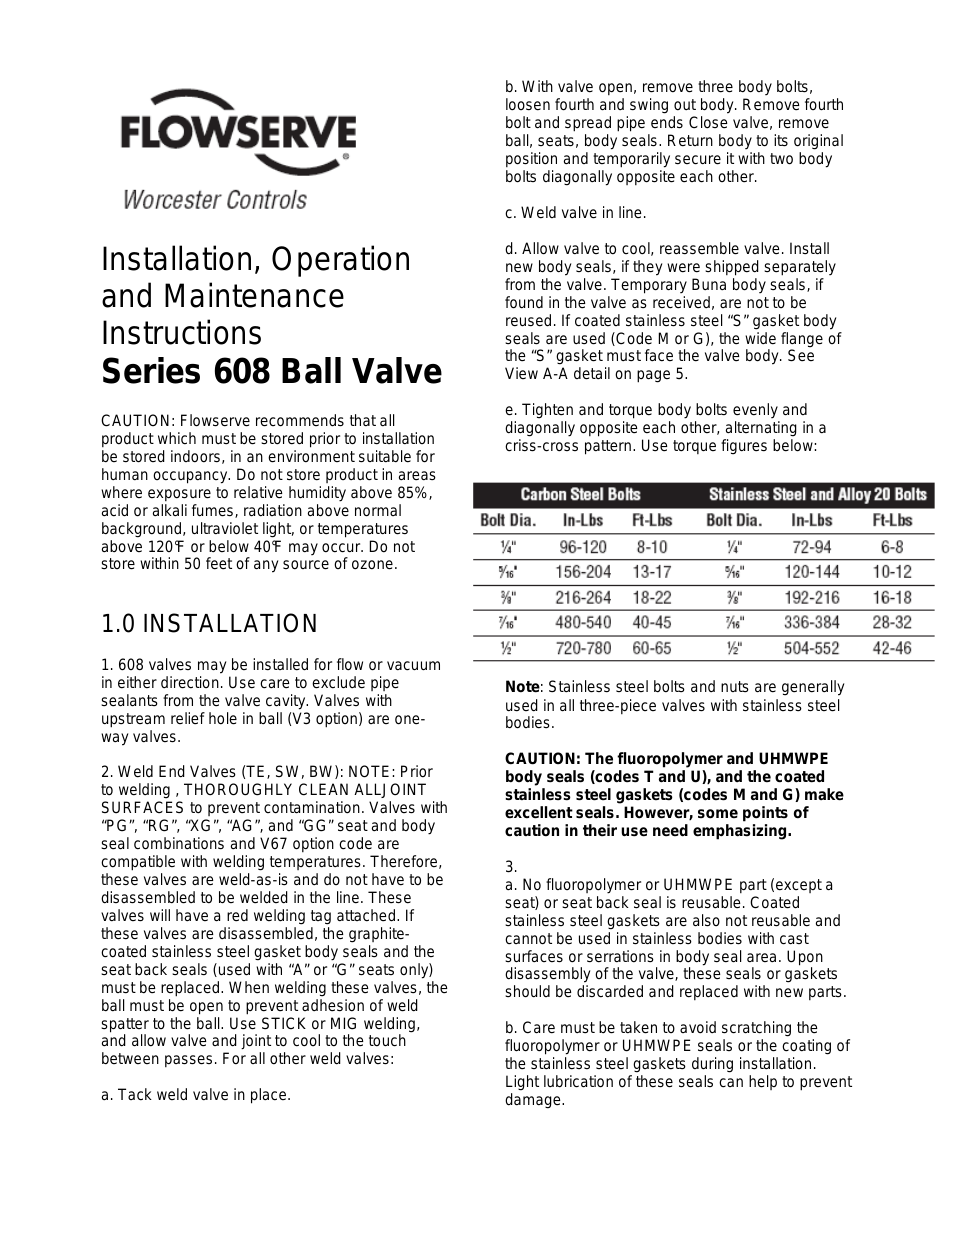 608 Series Ball Valve